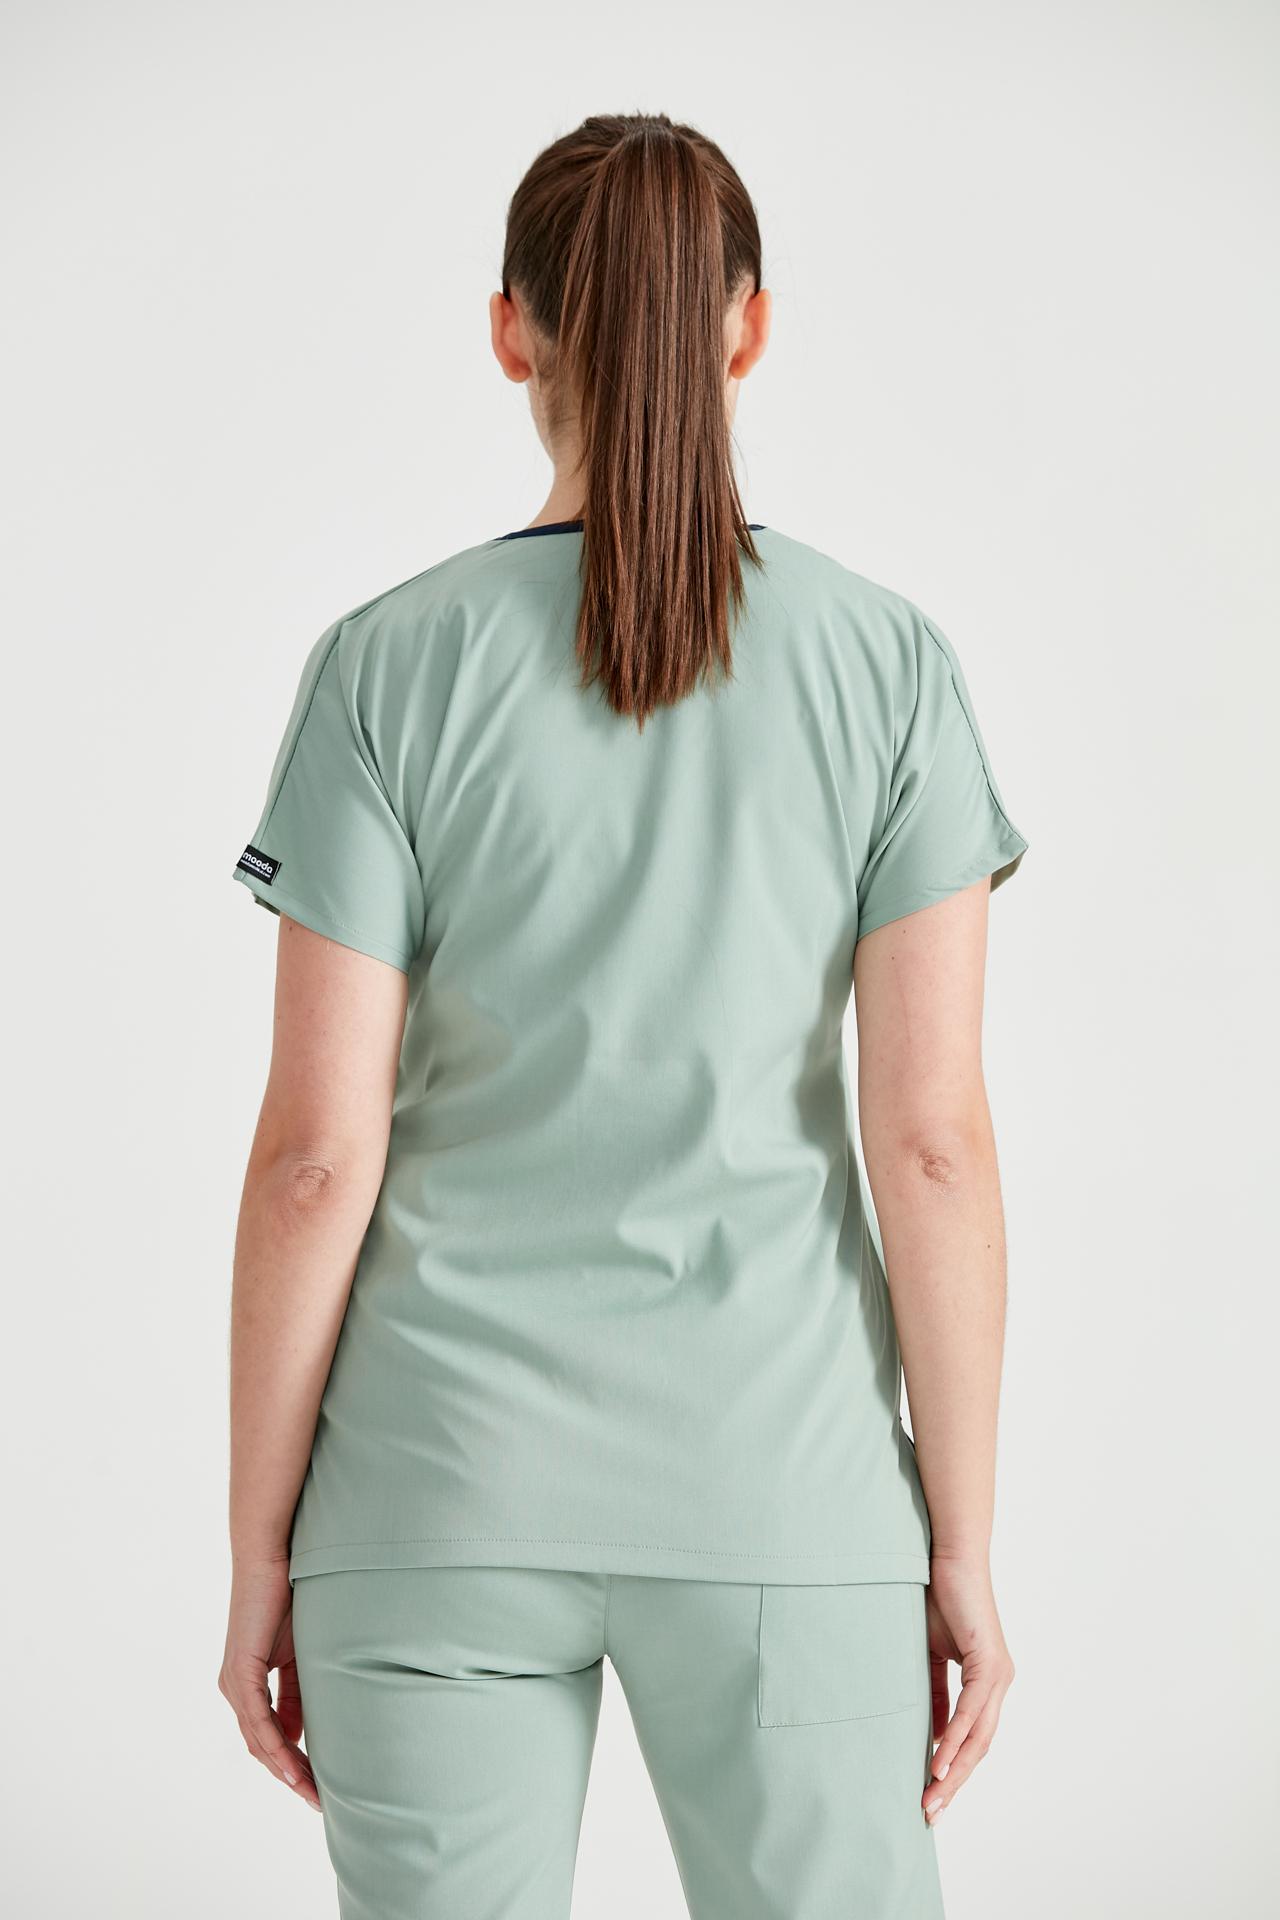 Asistenta medicala imbracata in costum medical de dama din elastan, verde fistic, vedere din spate